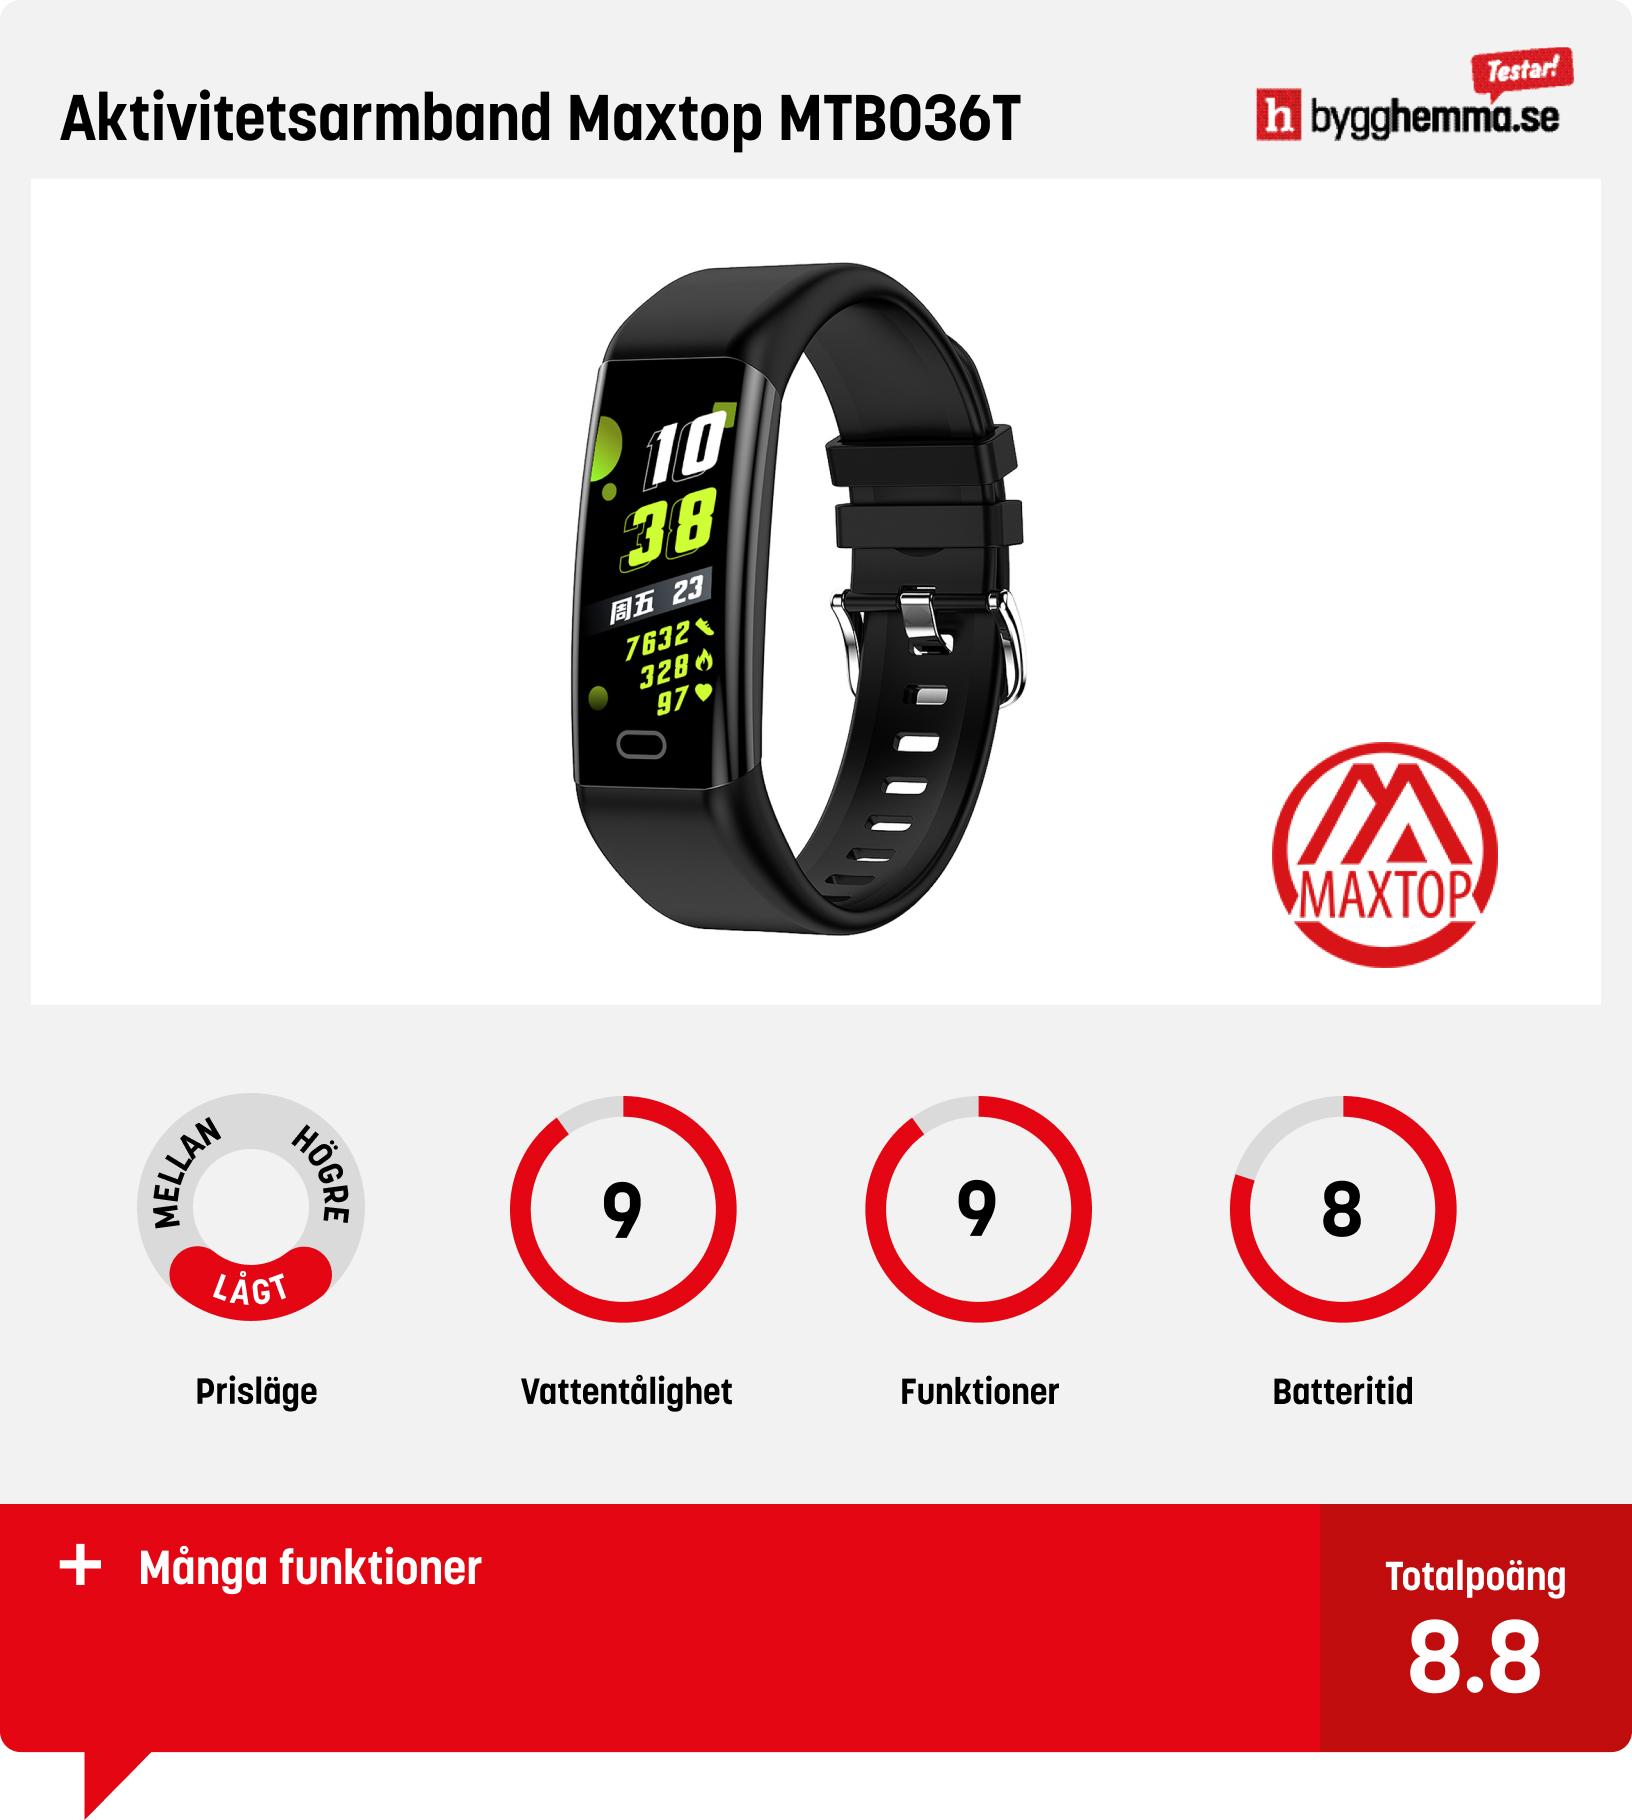 Smartwatch bäst i test - Aktivitetsarmband Maxtop MTB036T